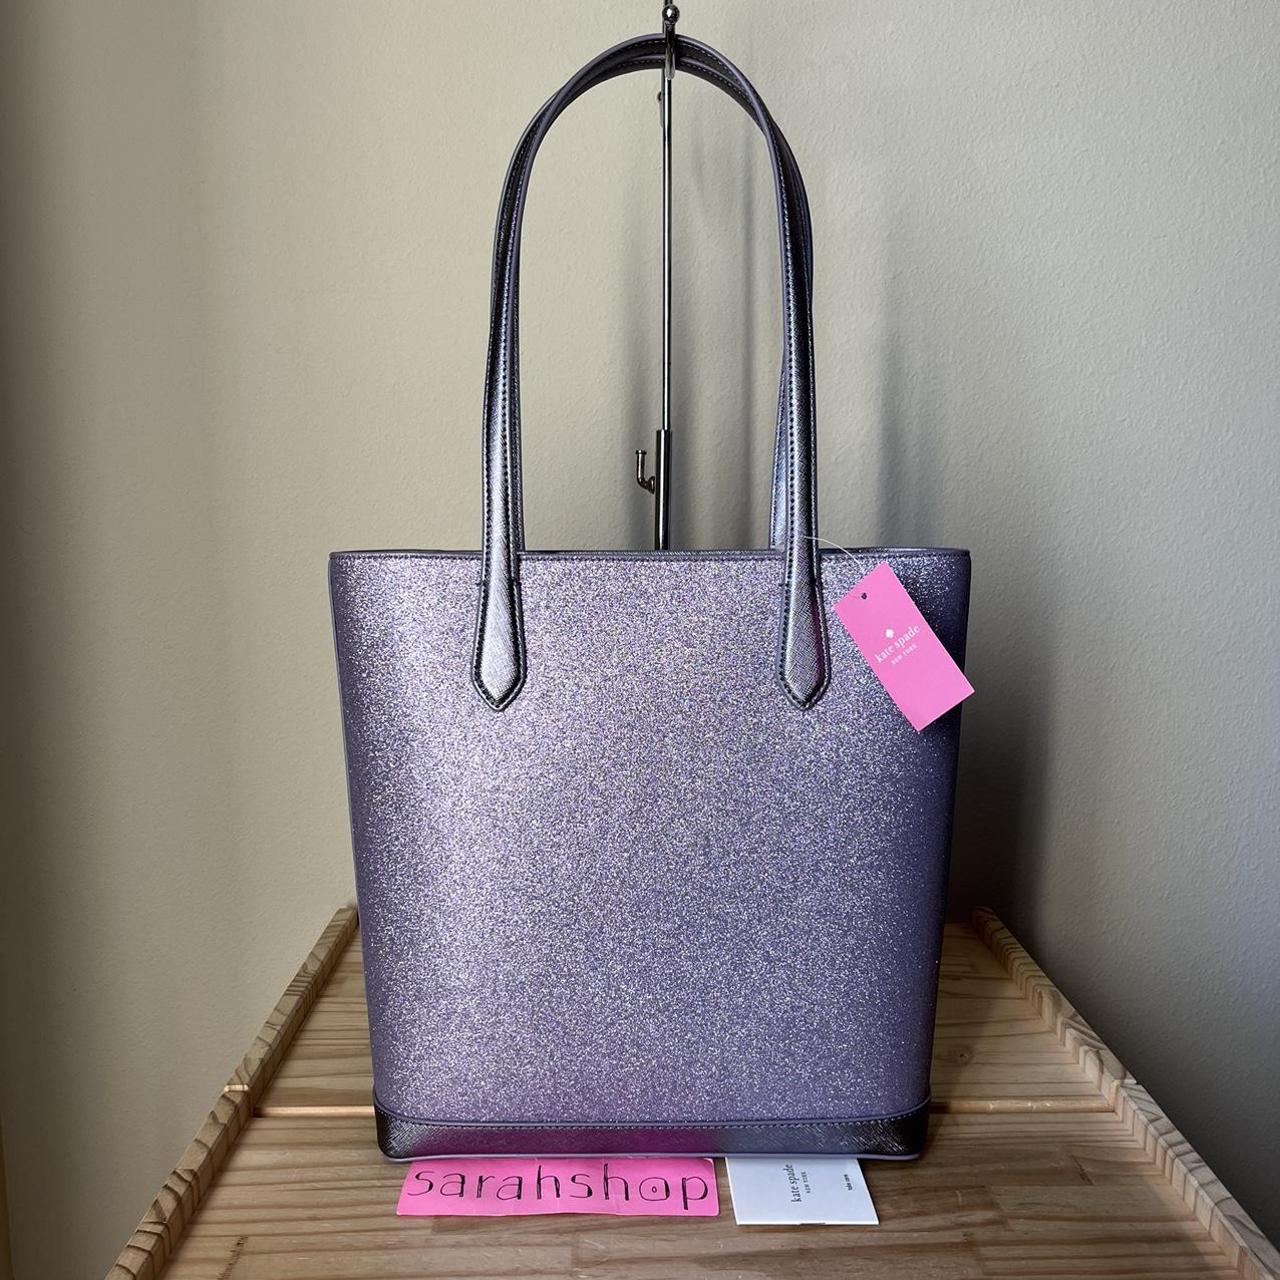 Kate spade large purple tote purse bag - Women's handbags